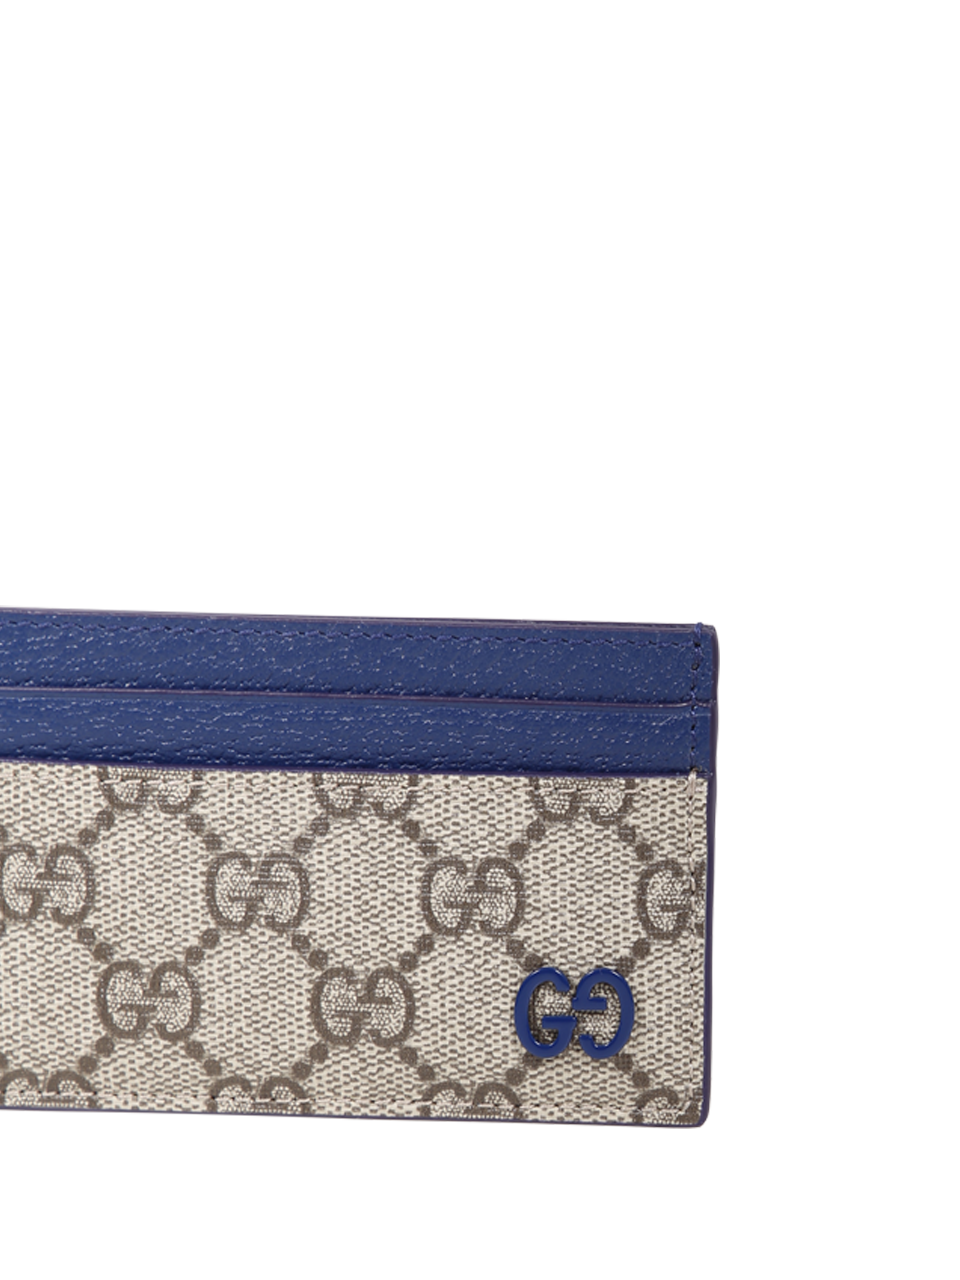 Buy Men Gucci Blue Leather Wallet Online India | Ubuy